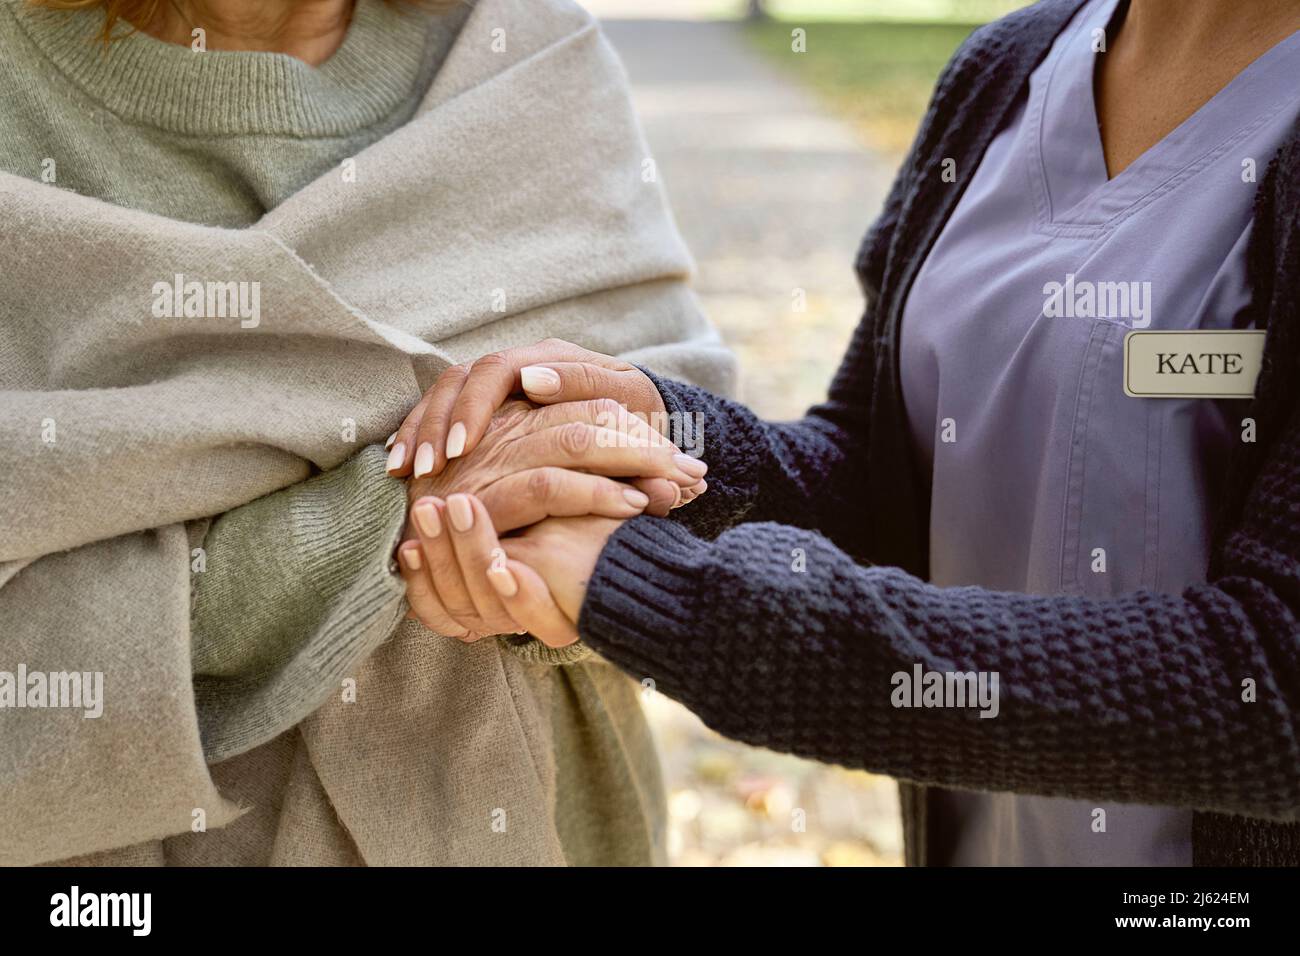 Caretaker holding hands consoling senior woman Stock Photo